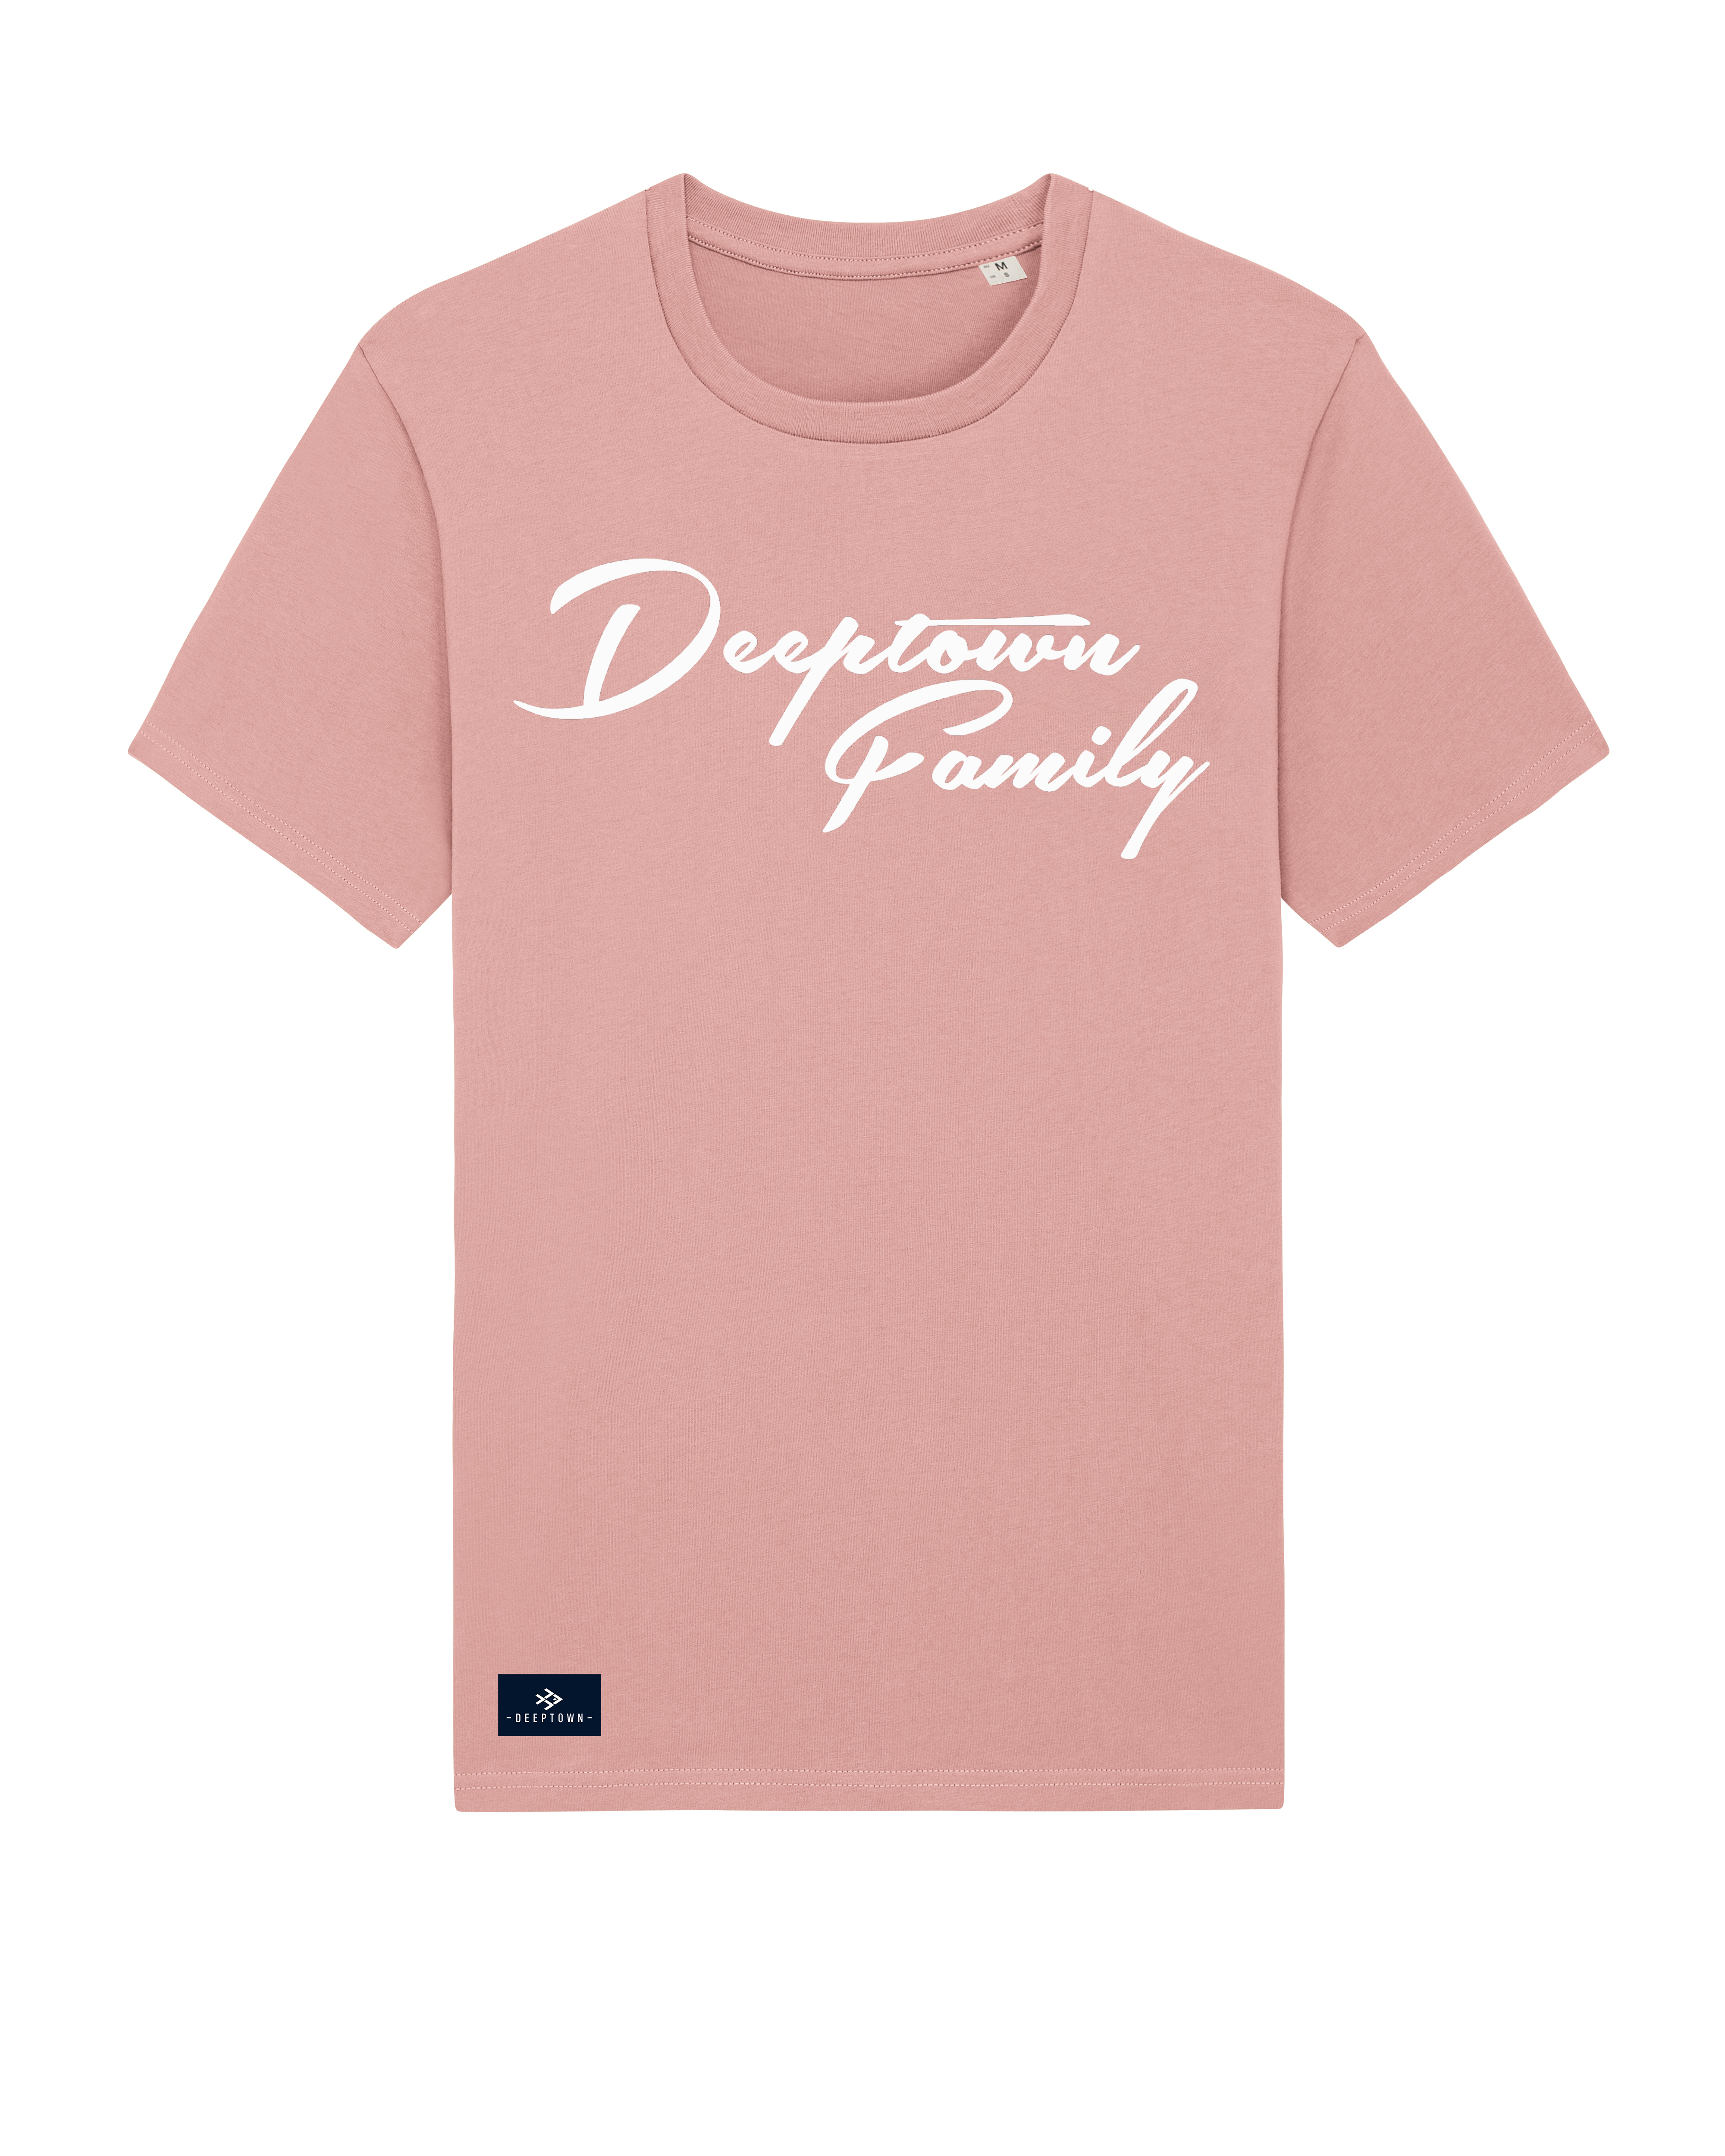 T-shirt Deeptown Family  Rose Canyon